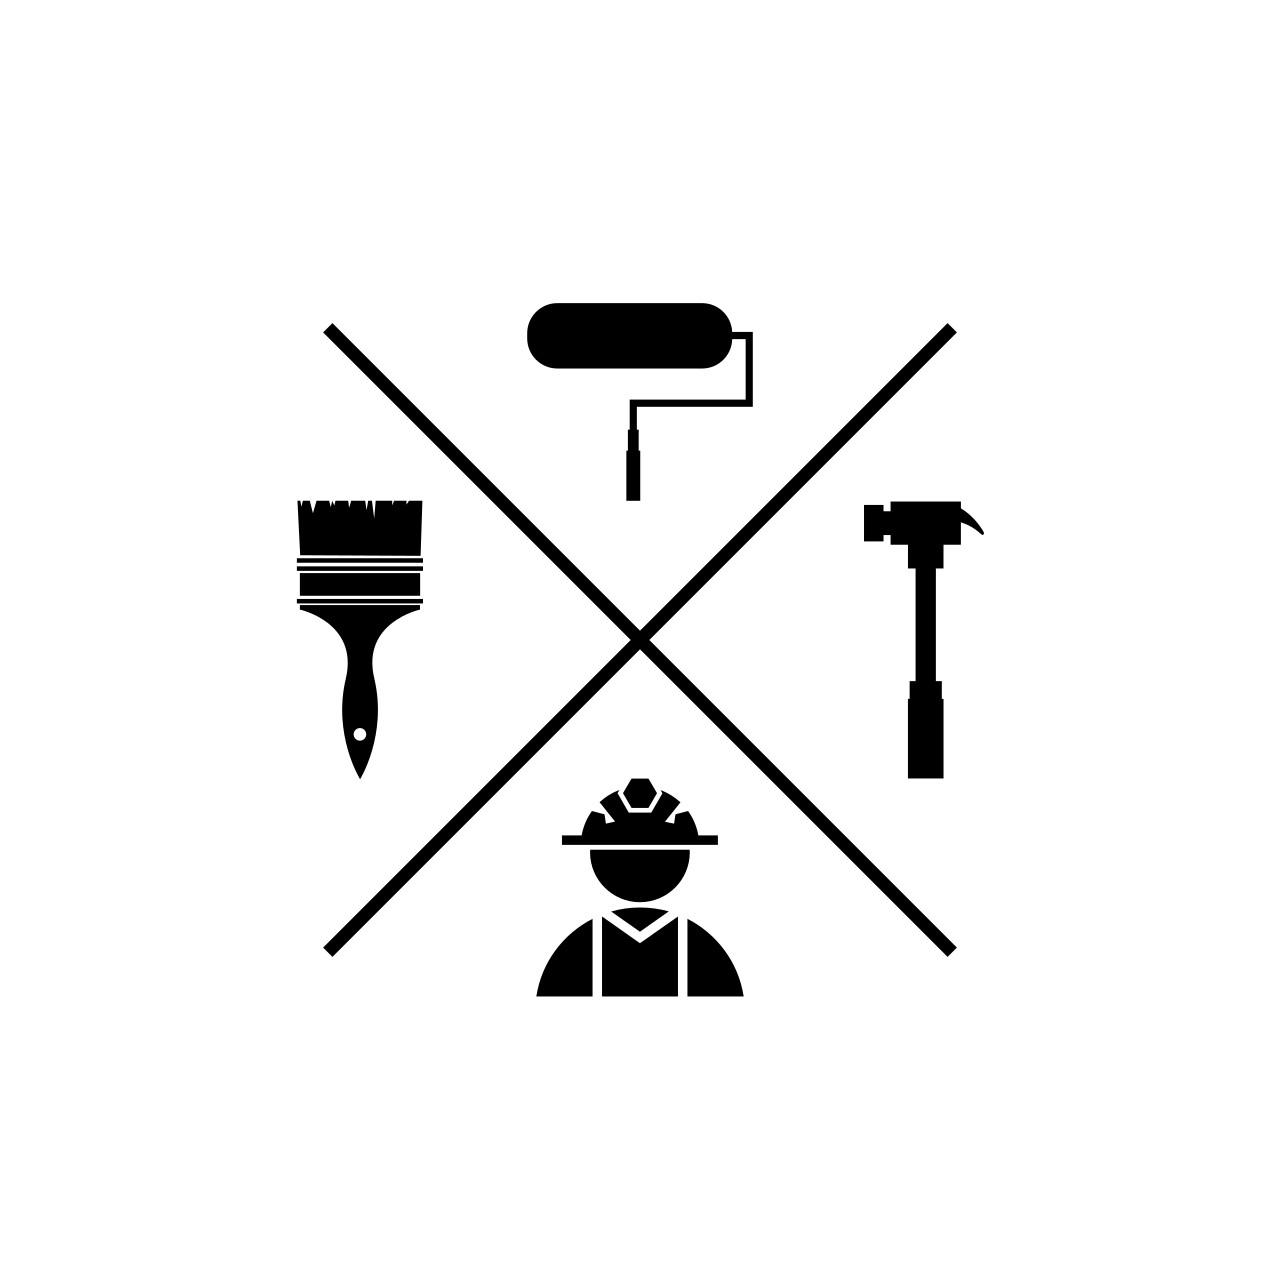 Home Repair Services's logo